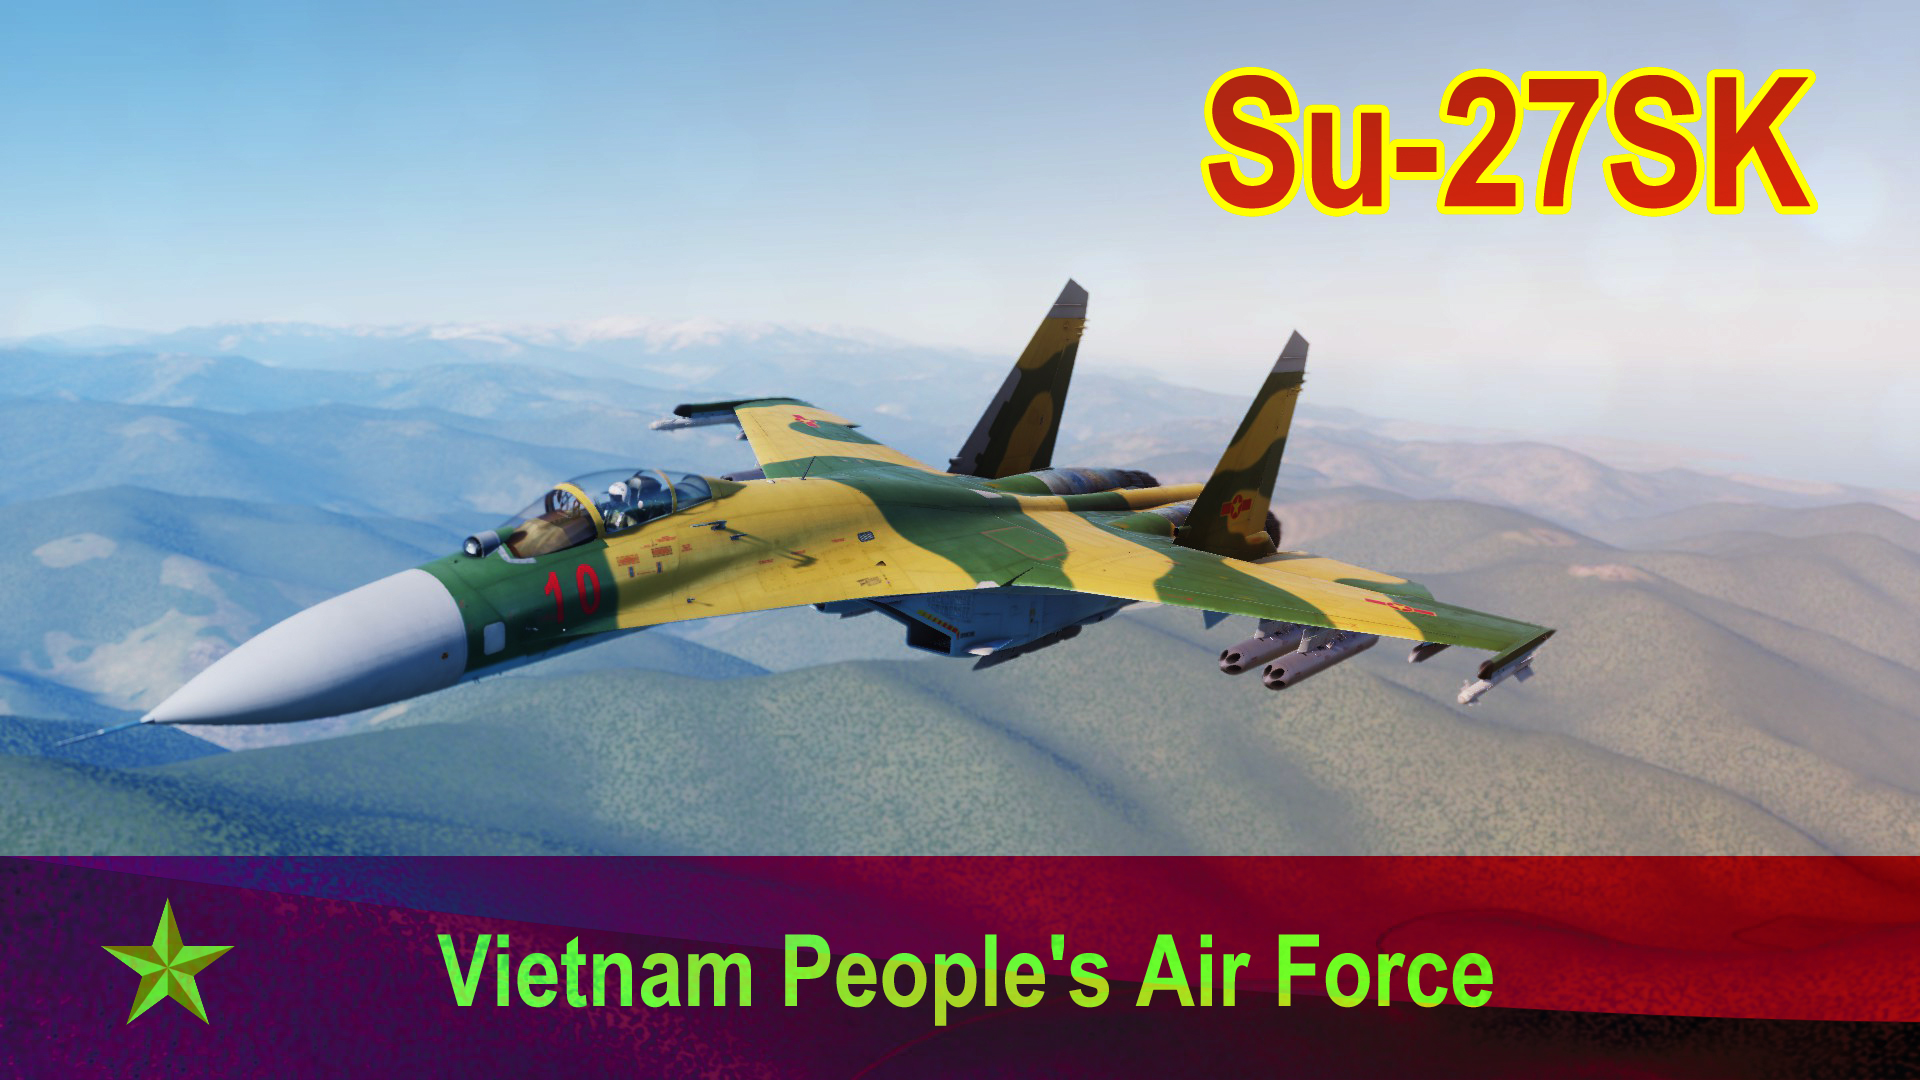 Su-27SK by Vietnam People's Air Force (2019)